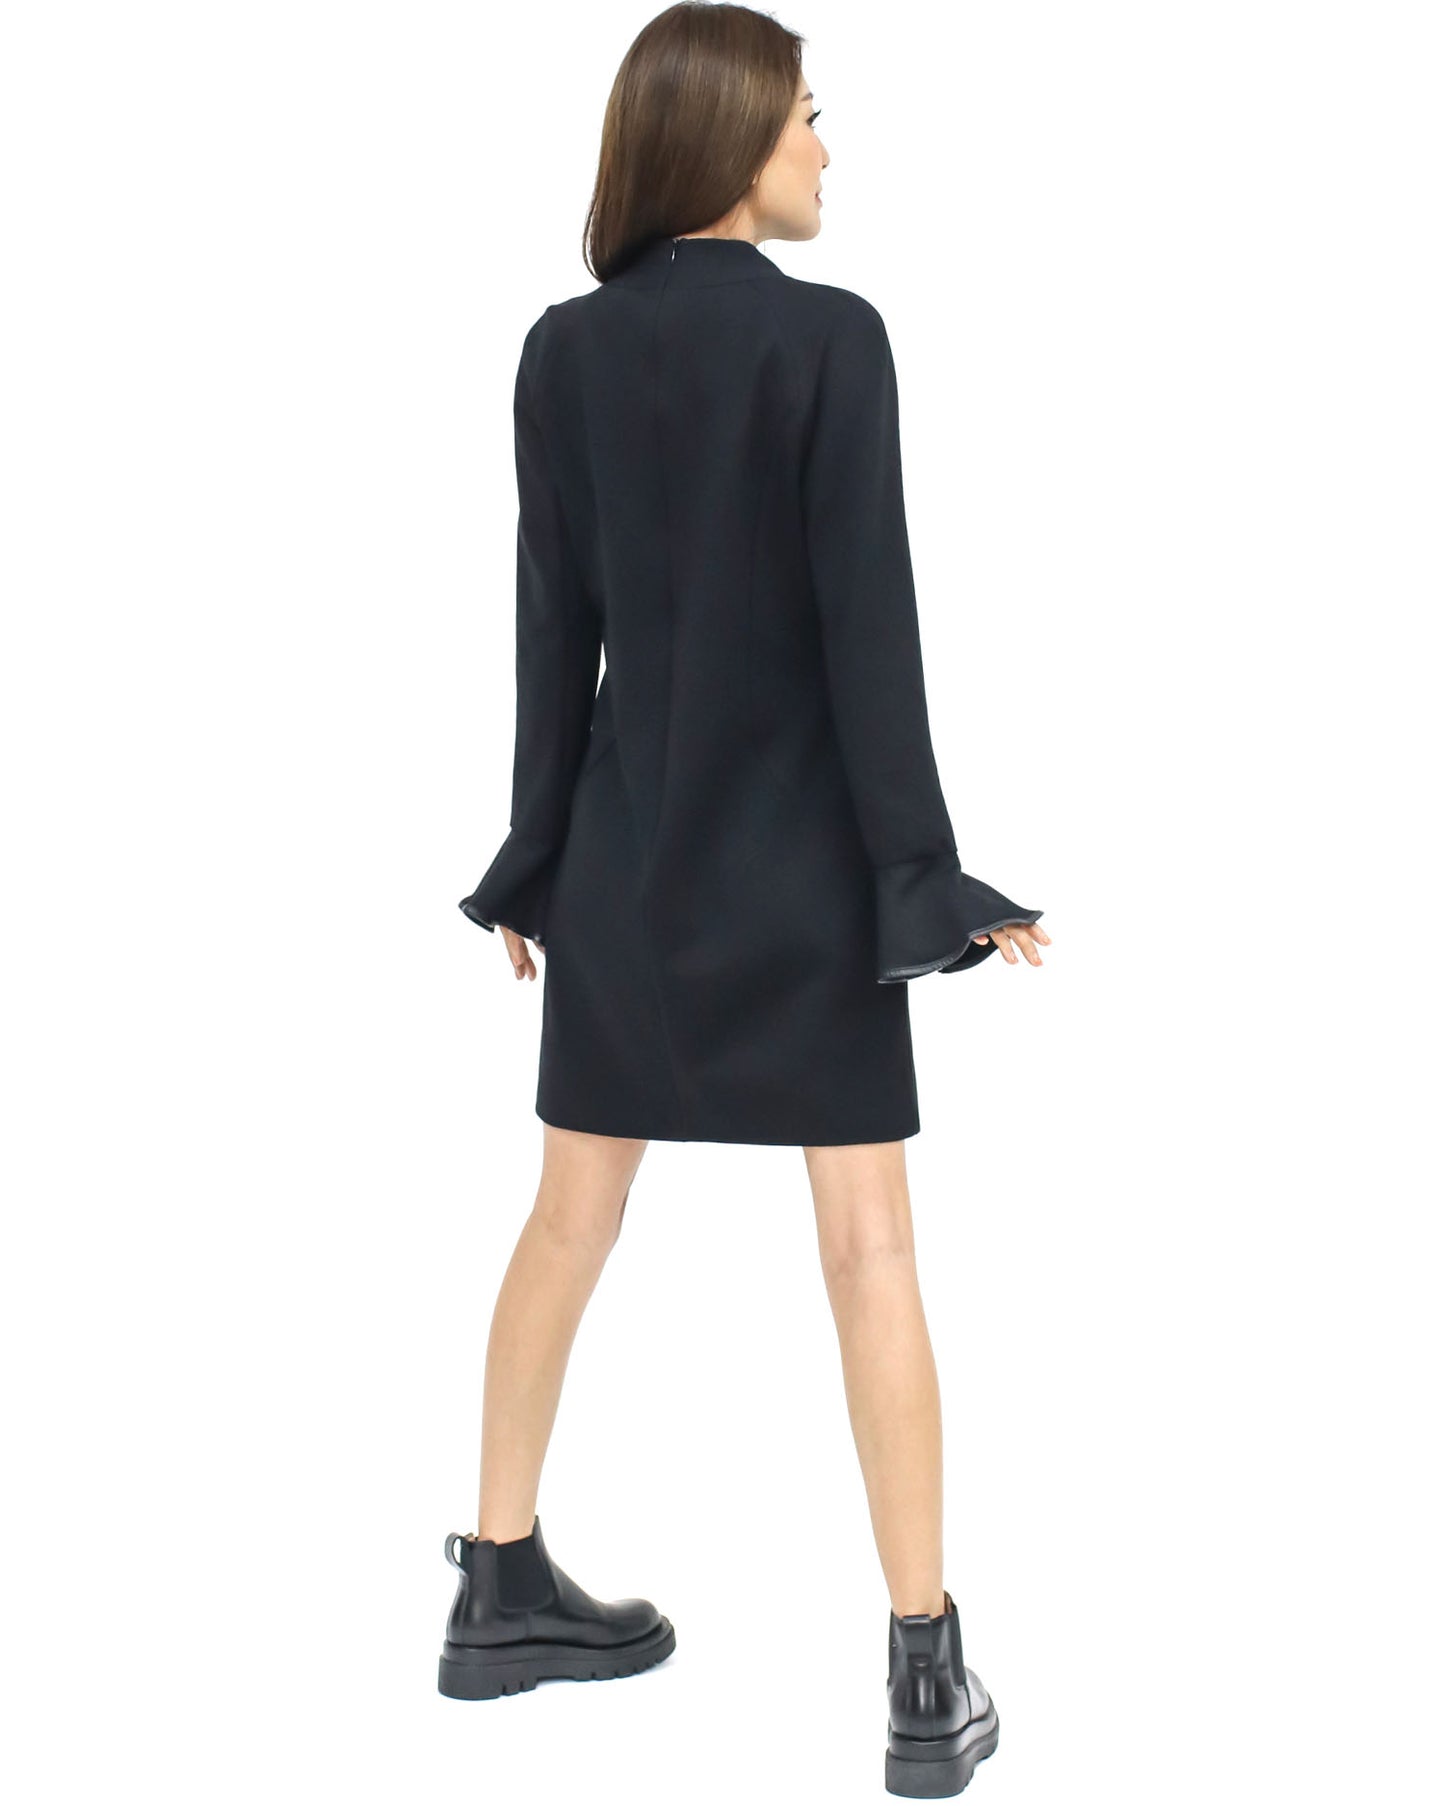 black soft neoprene w/ PU leather pocket front ruffles sleeves dress